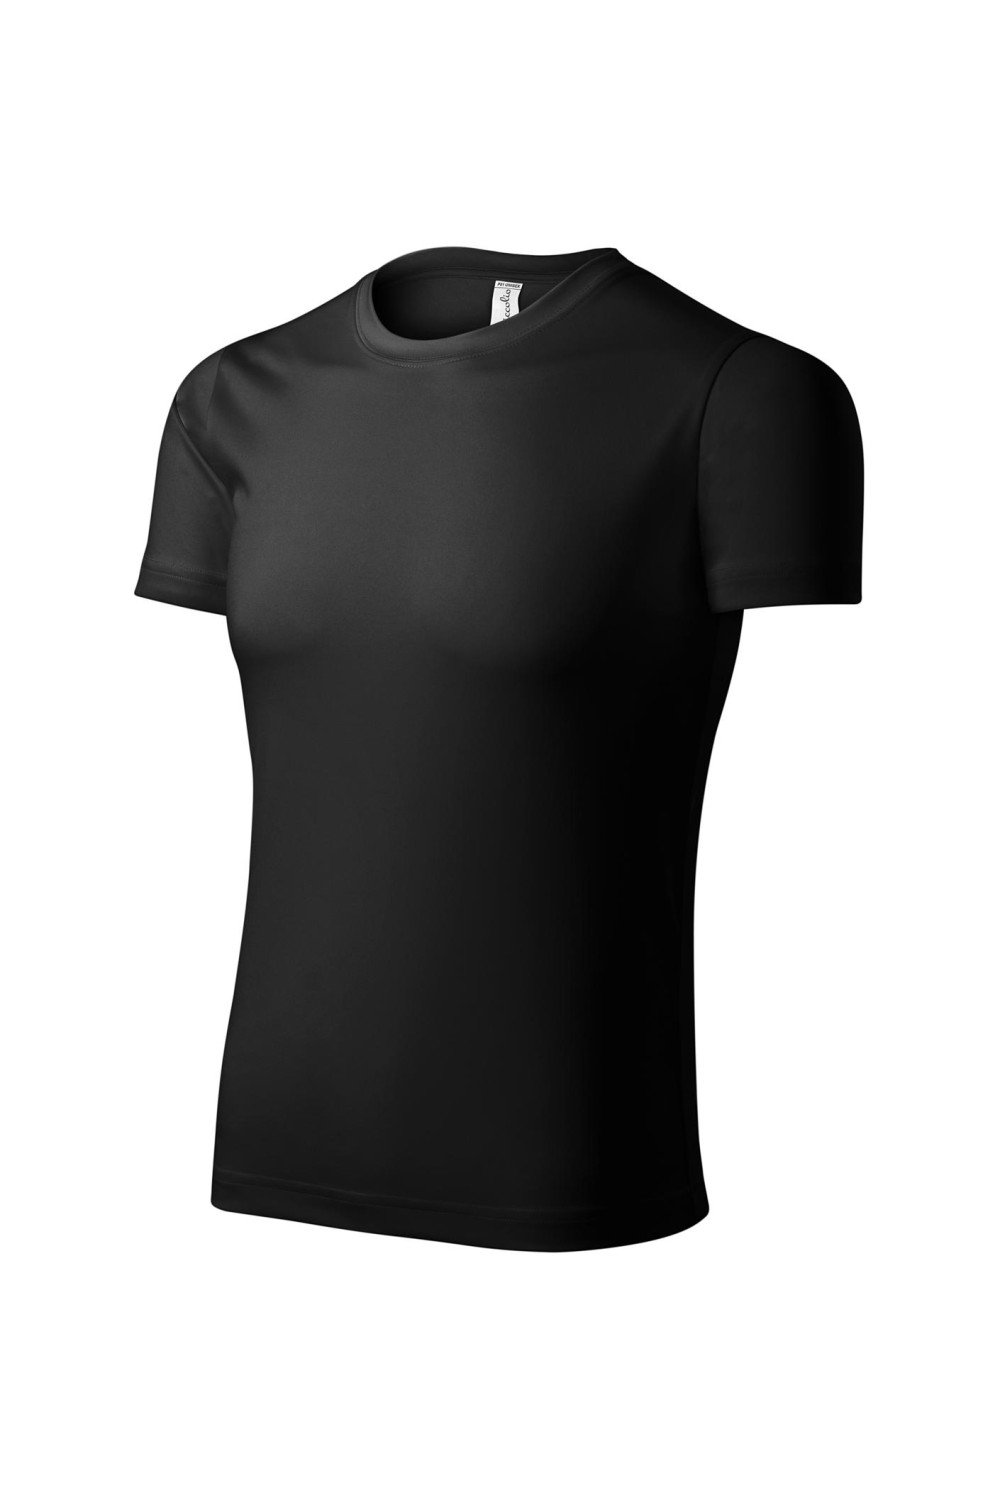 PIXEL P81 MALFINI ADLER Koszulka t-shirt unisex czarny